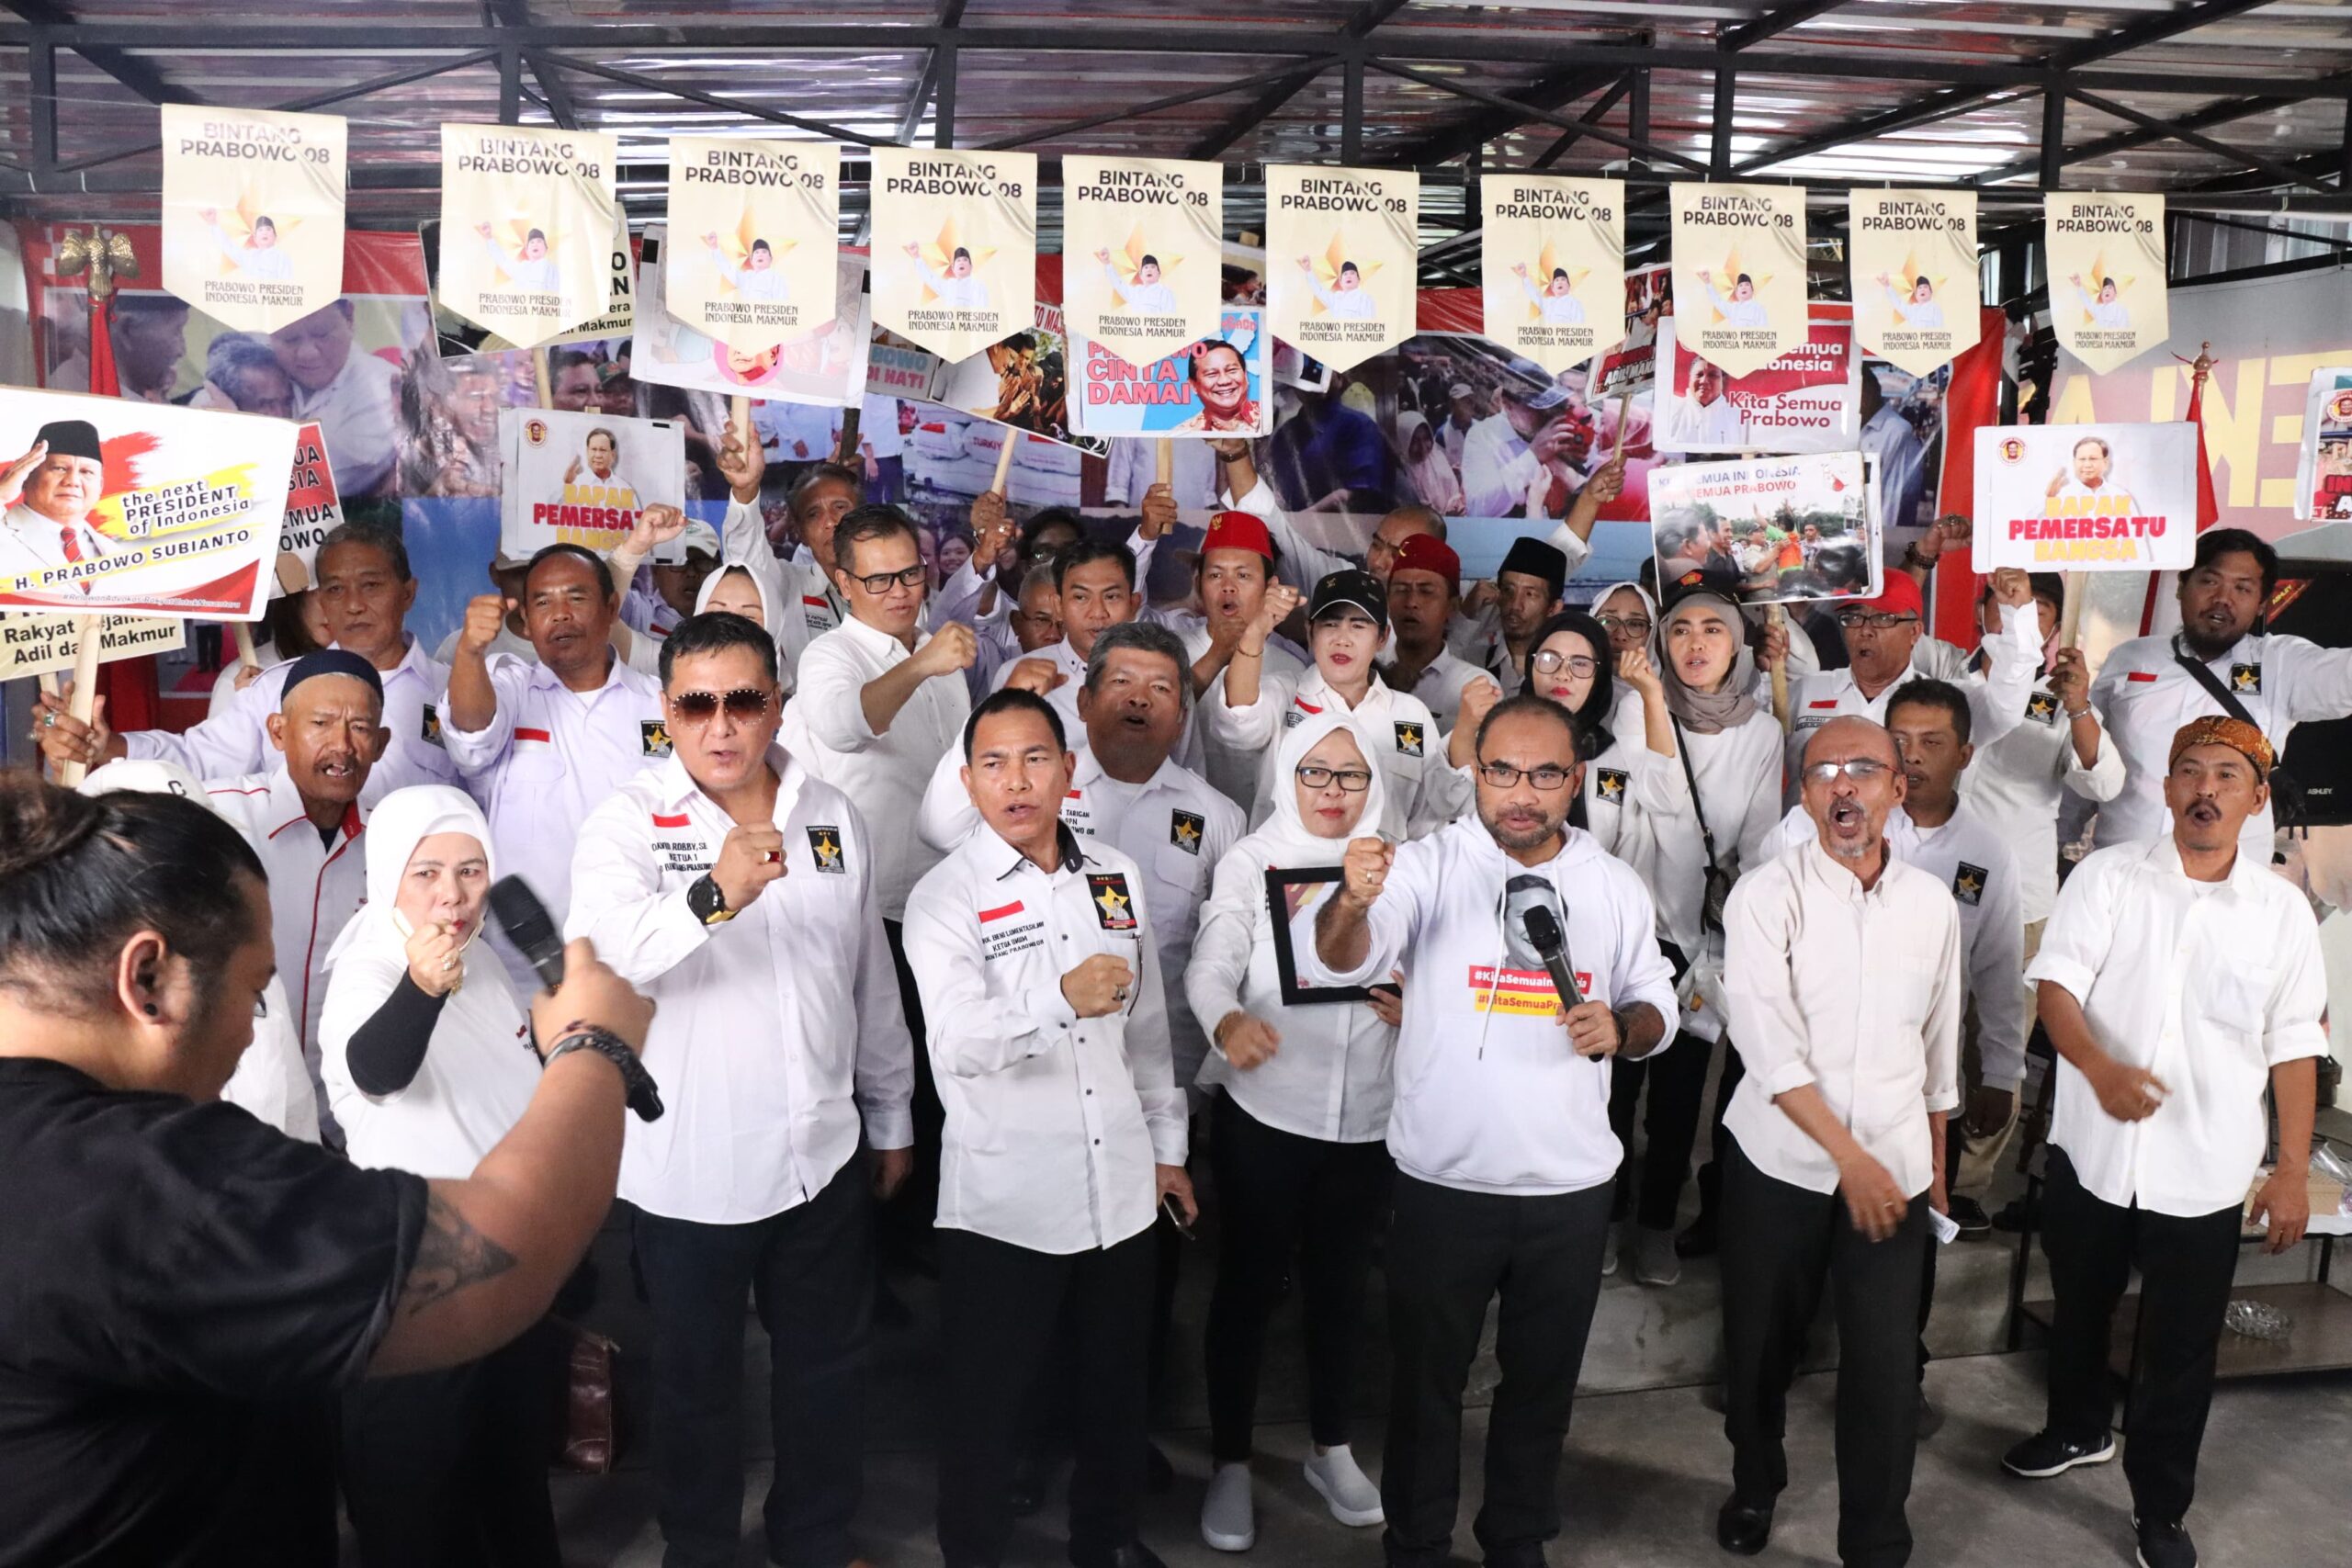 Lanjutkan Program Jokowi, Bintang Prabowo 08: "Pak Prabowo Layak Terima Tongkat Estafet"